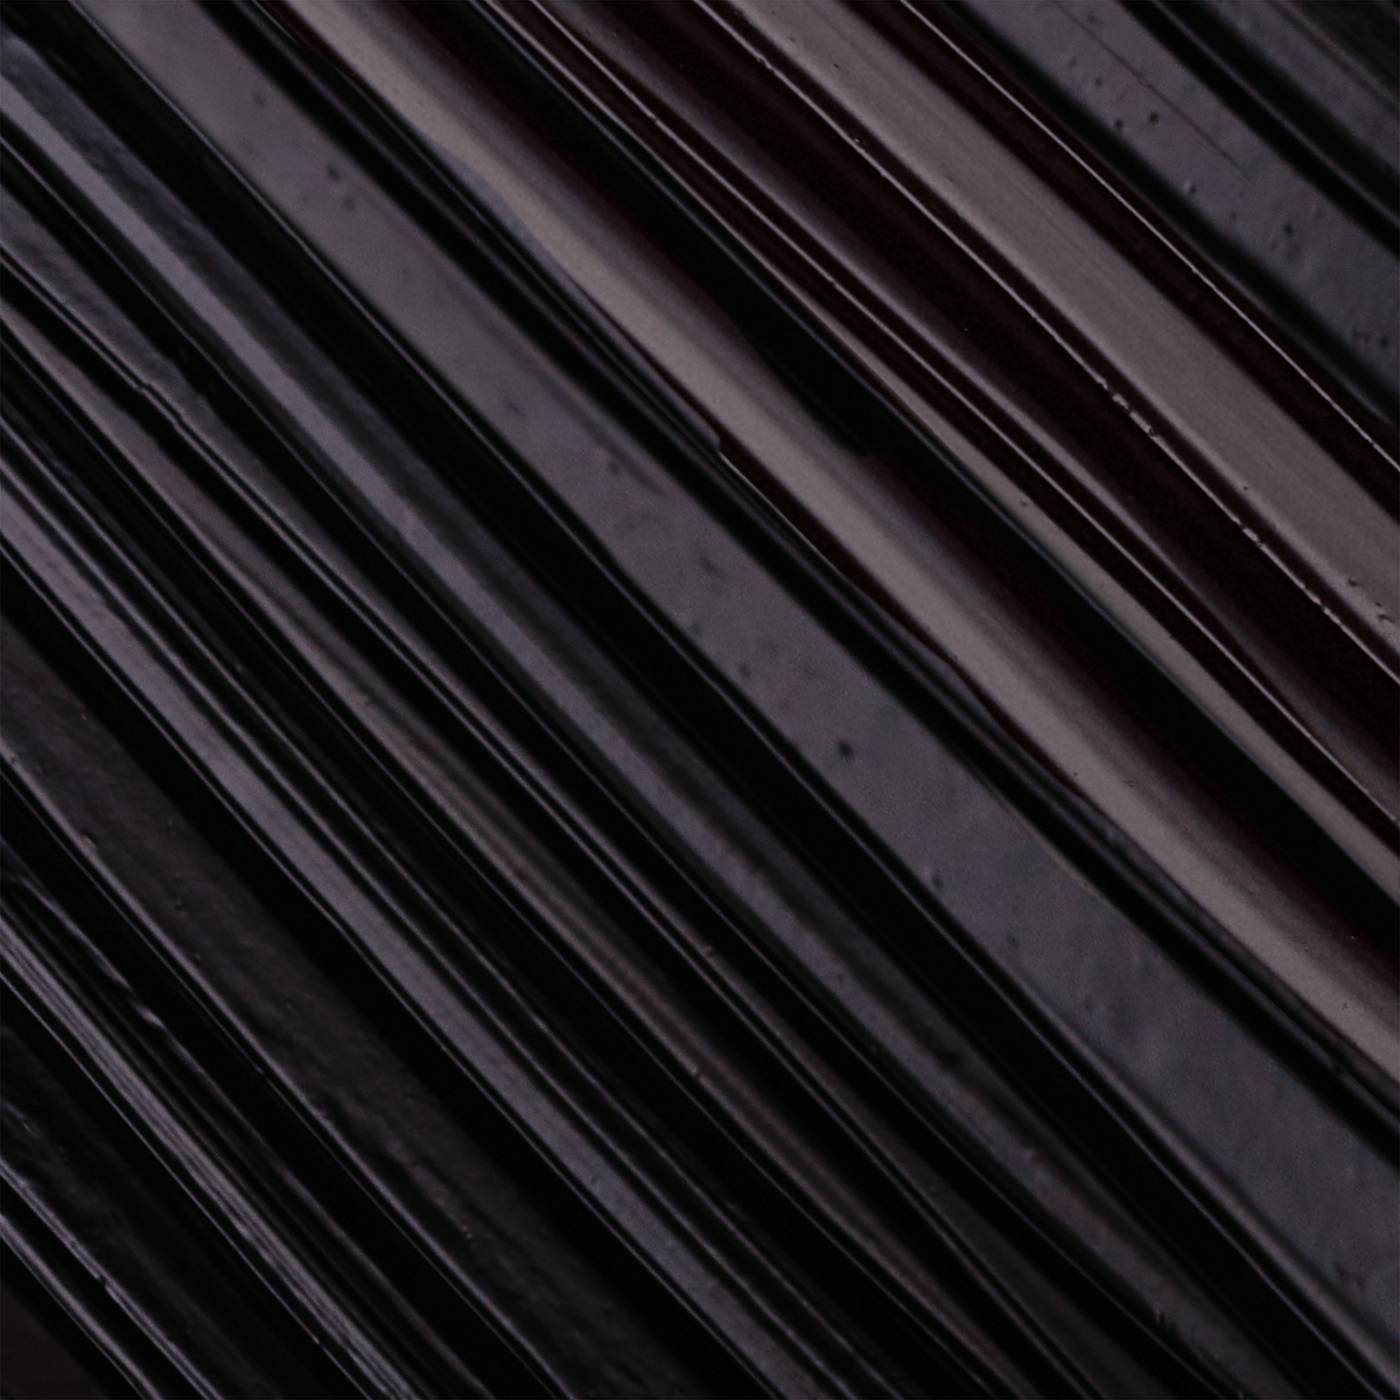 L'Oréal Paris Voluminous Original Curved Brush Mascara - Black; image 8 of 8